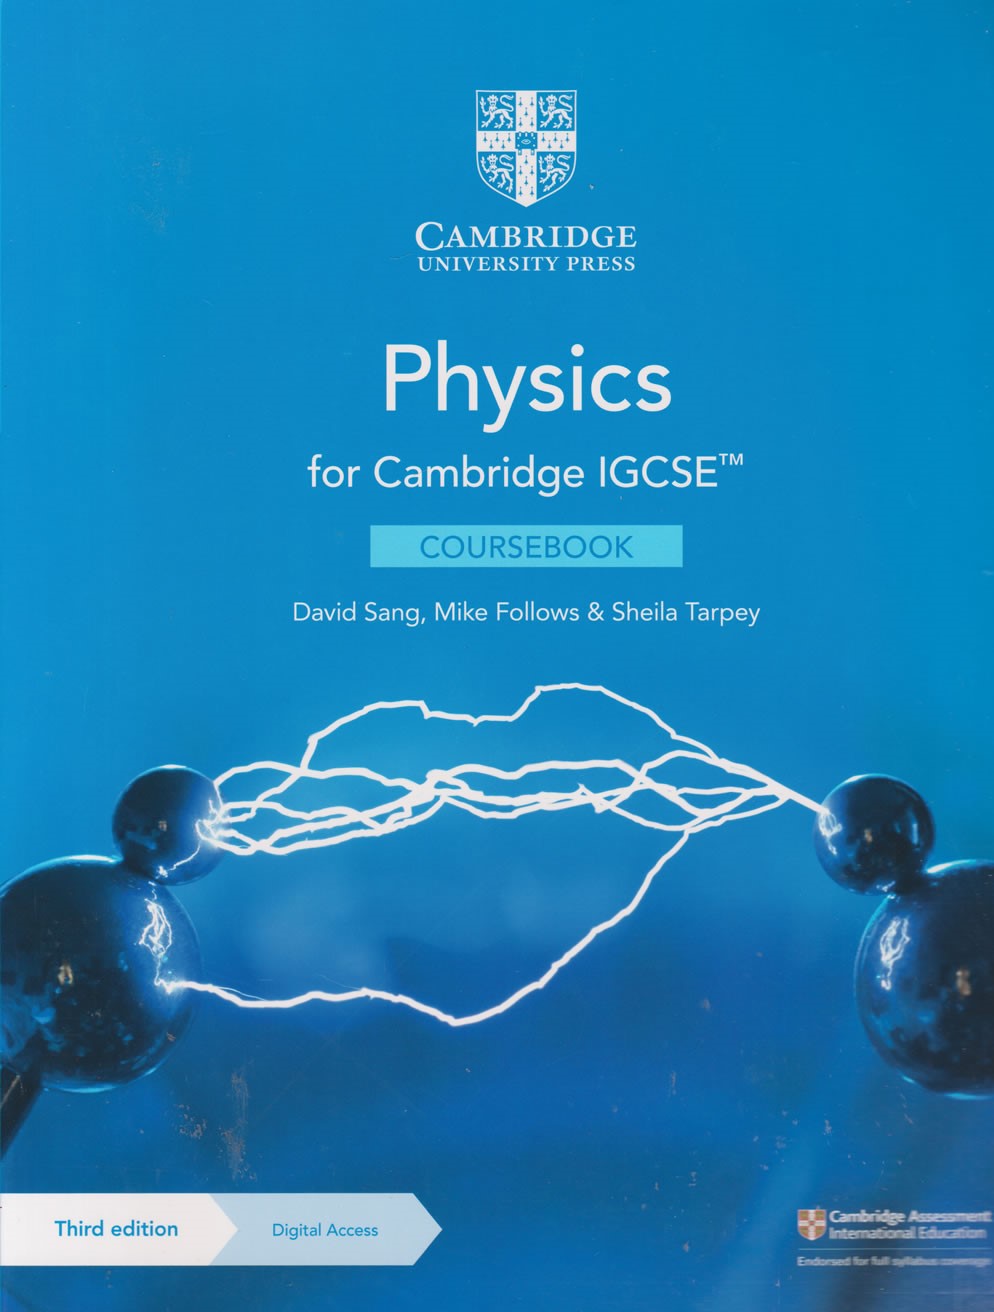 cambridge physics phd students